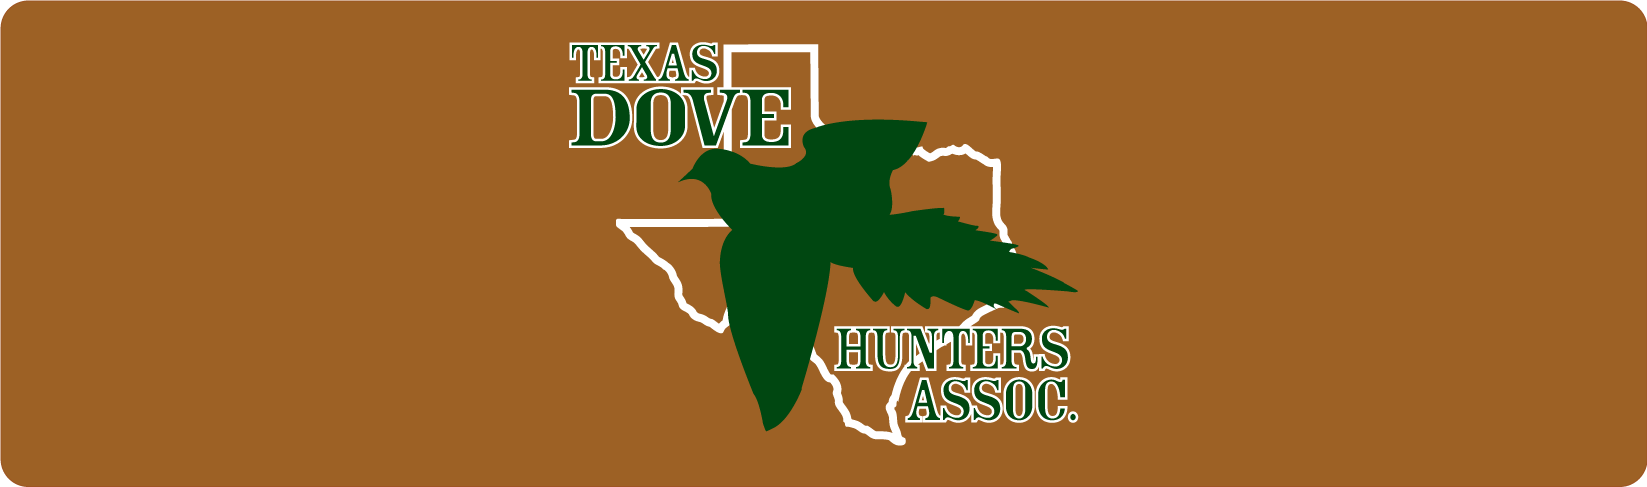 Brown Dove Logo - Texas Dove Hunters Association Bird Program